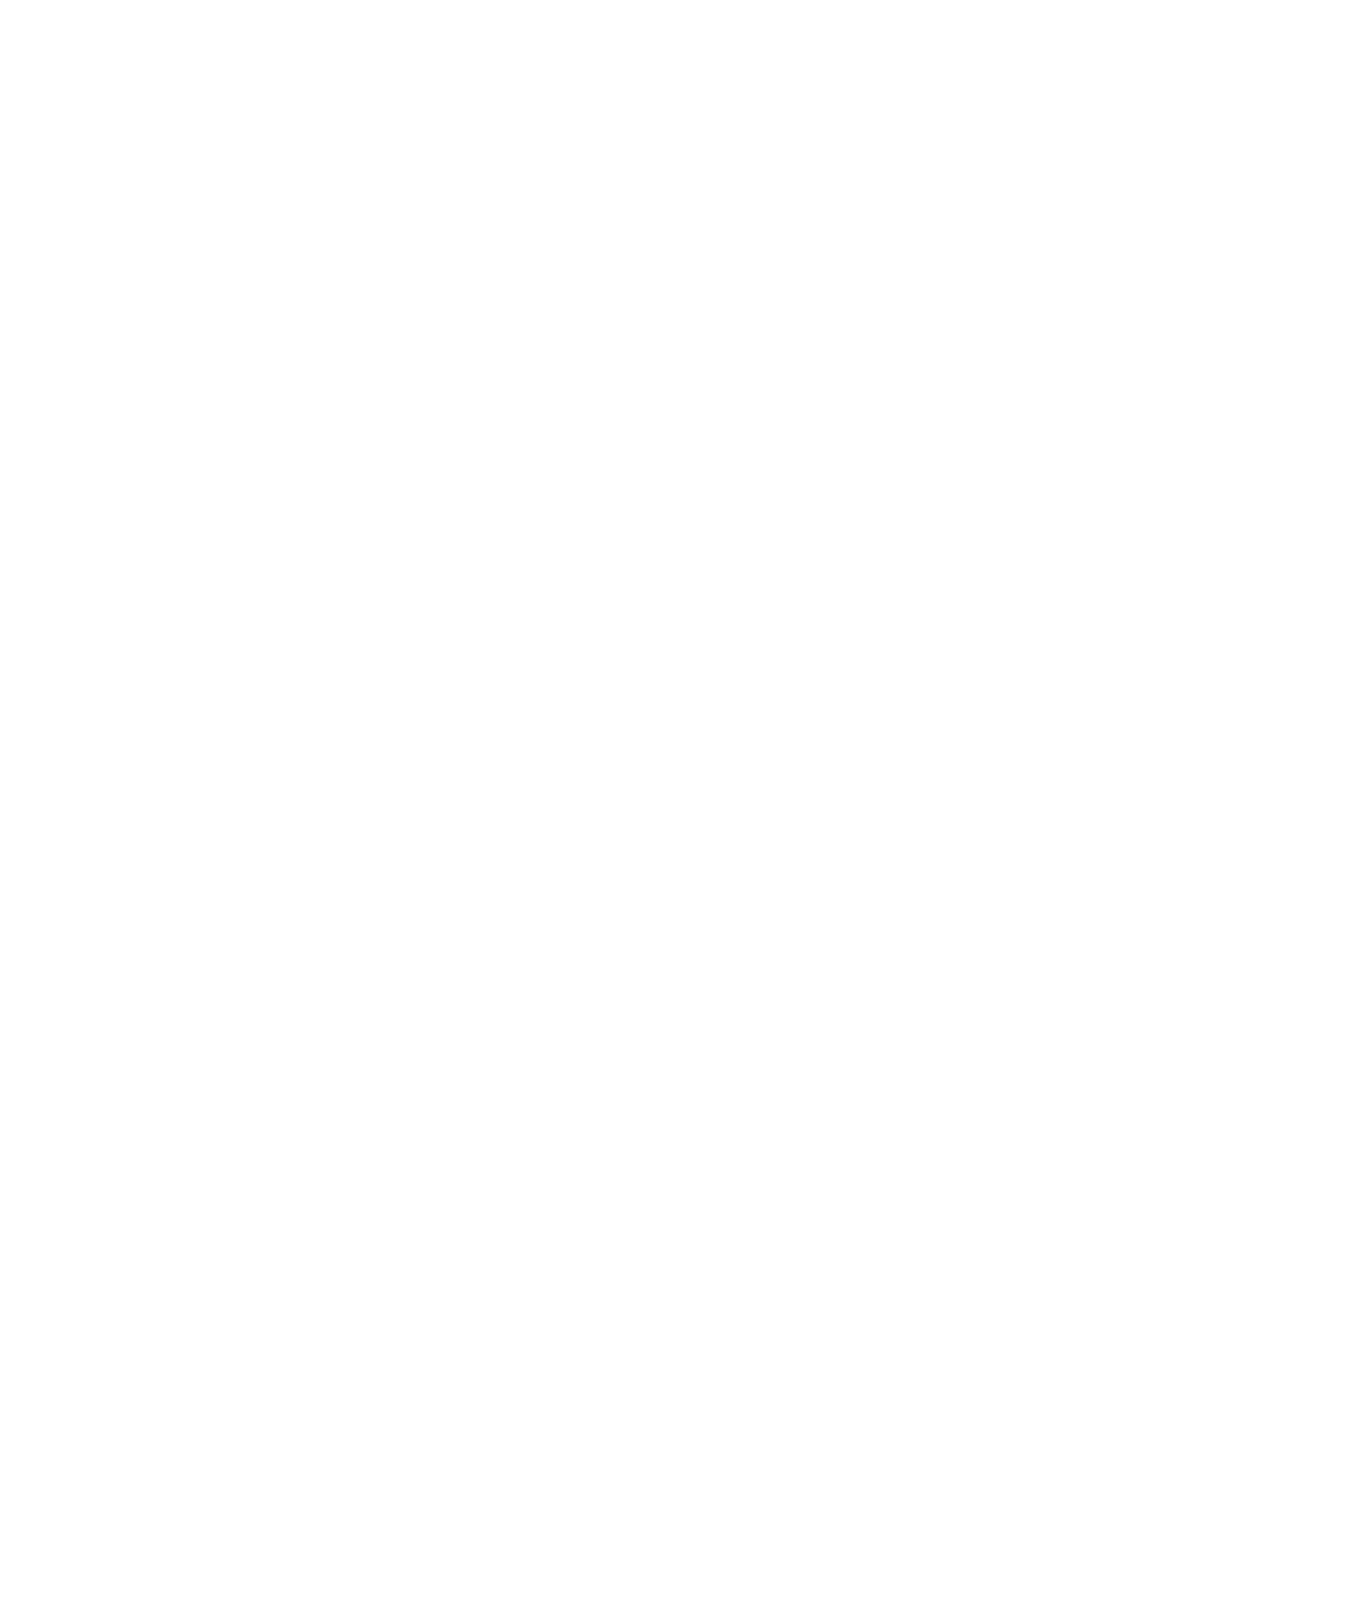 Cintas logo for dark backgrounds (transparent PNG)